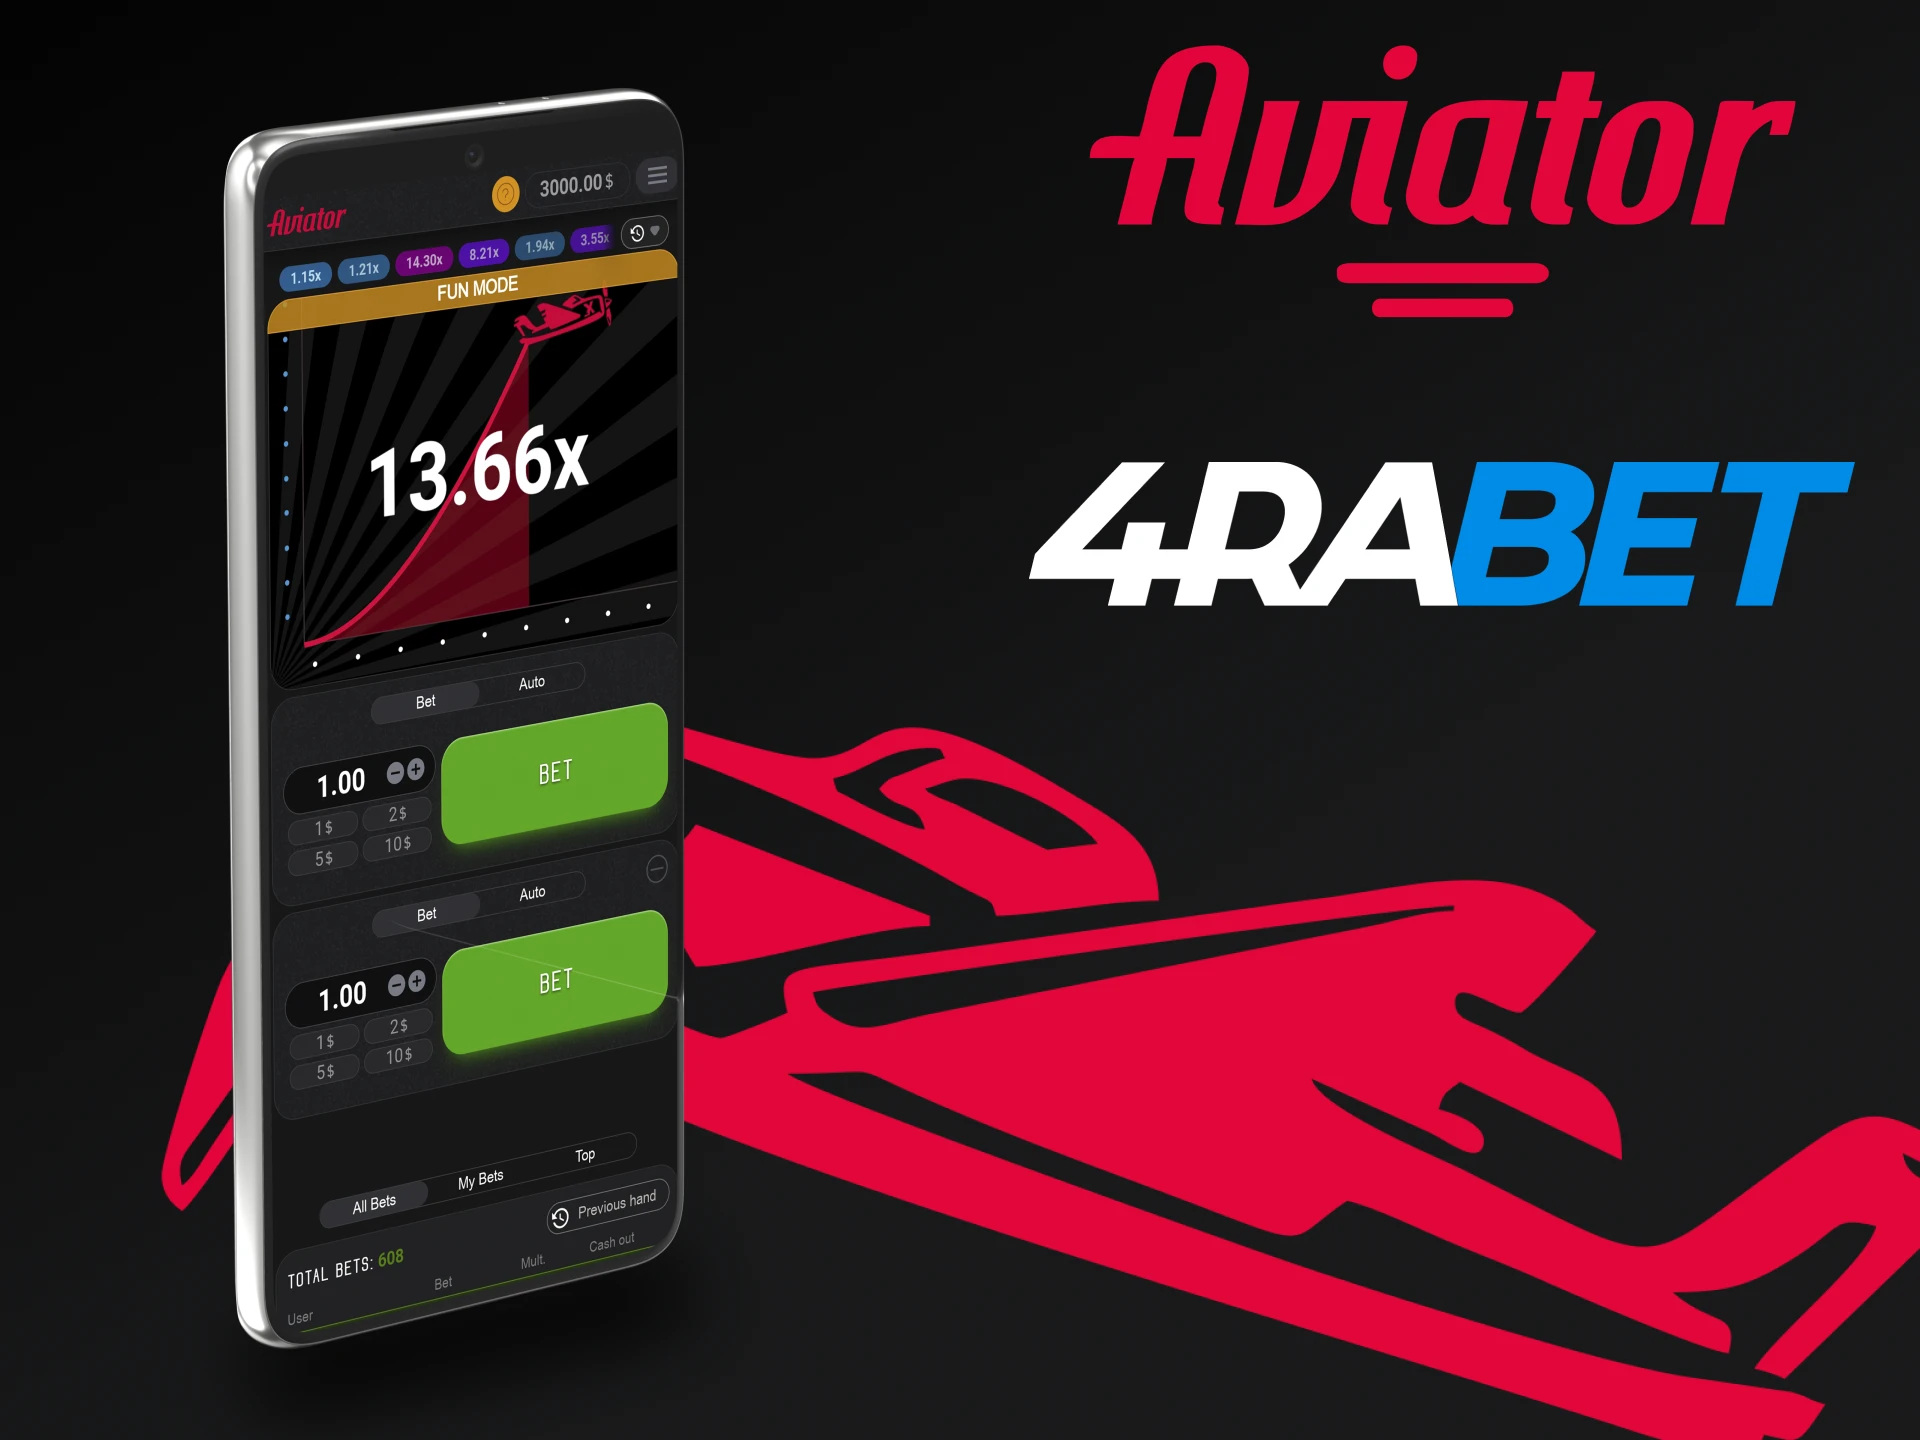 To play Aviator choose 4rabet mobile app.